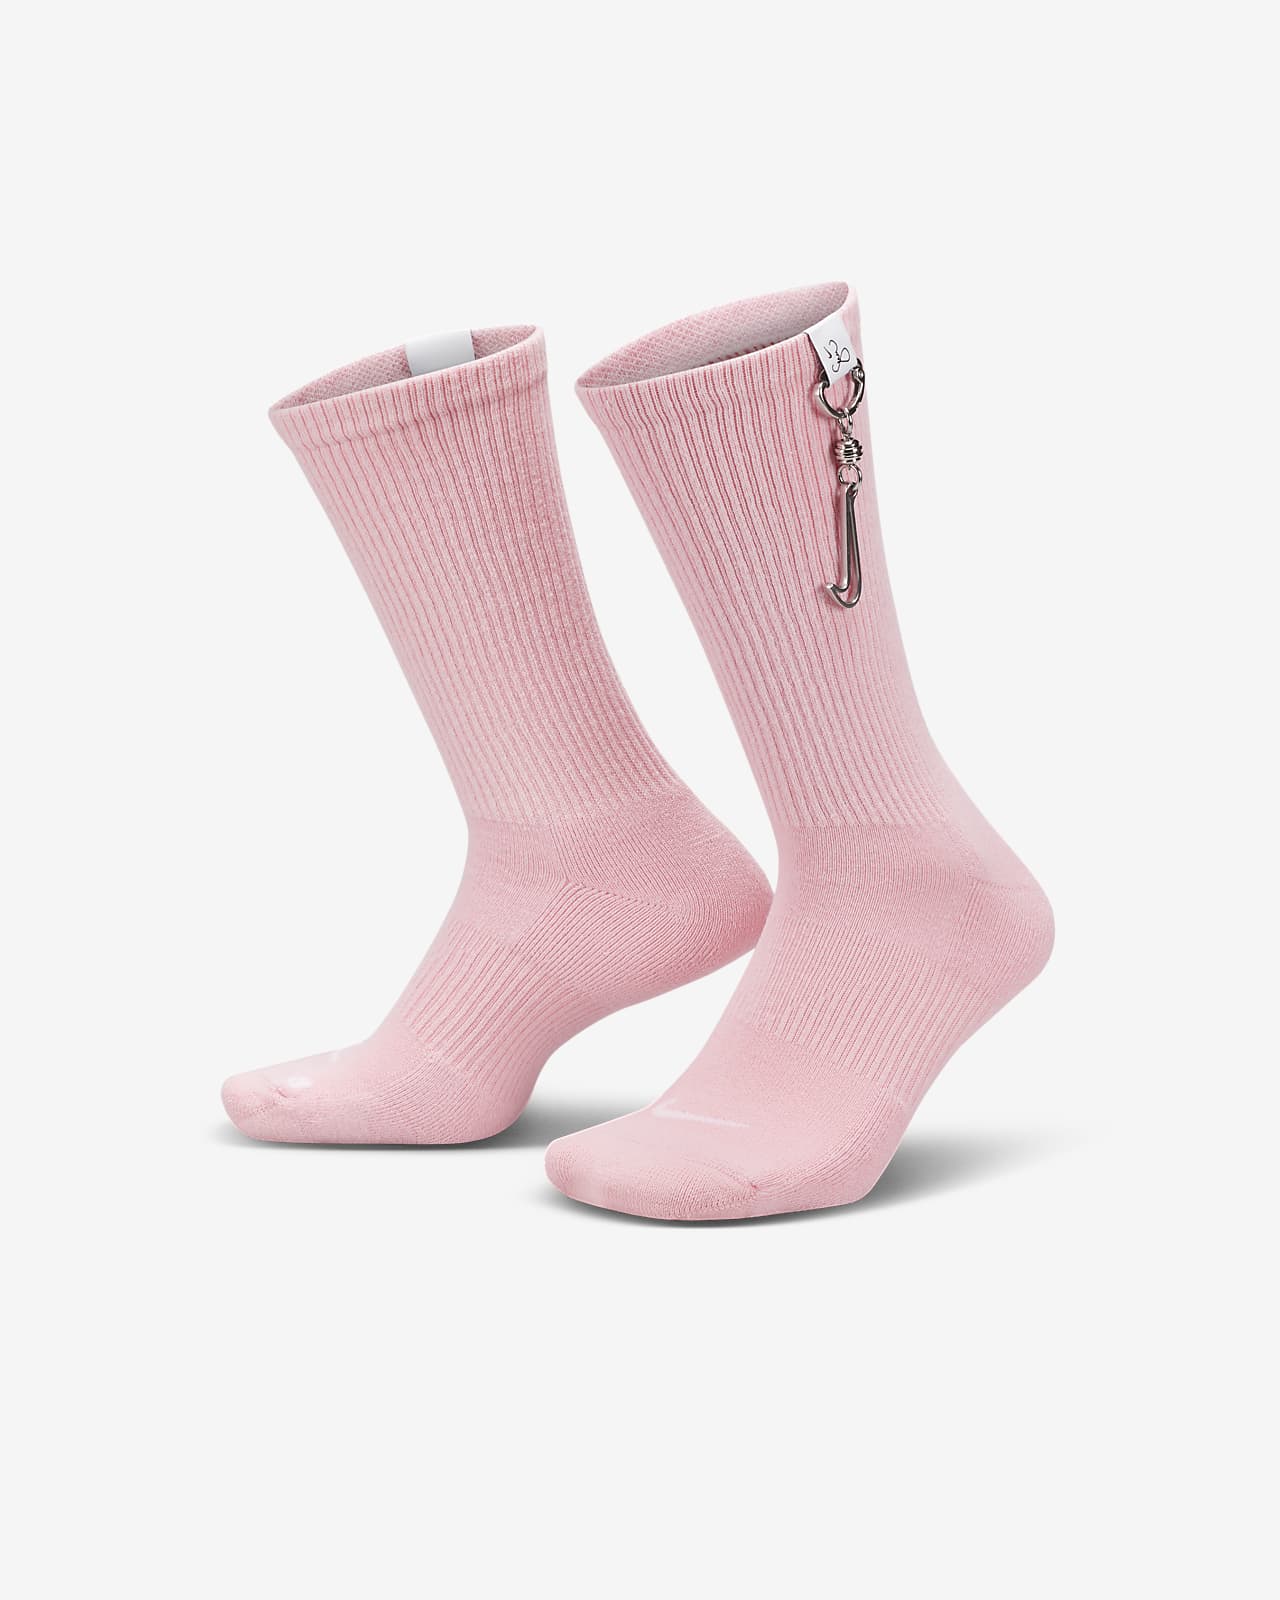 Louis Vuitton Socks for Women -  Canada